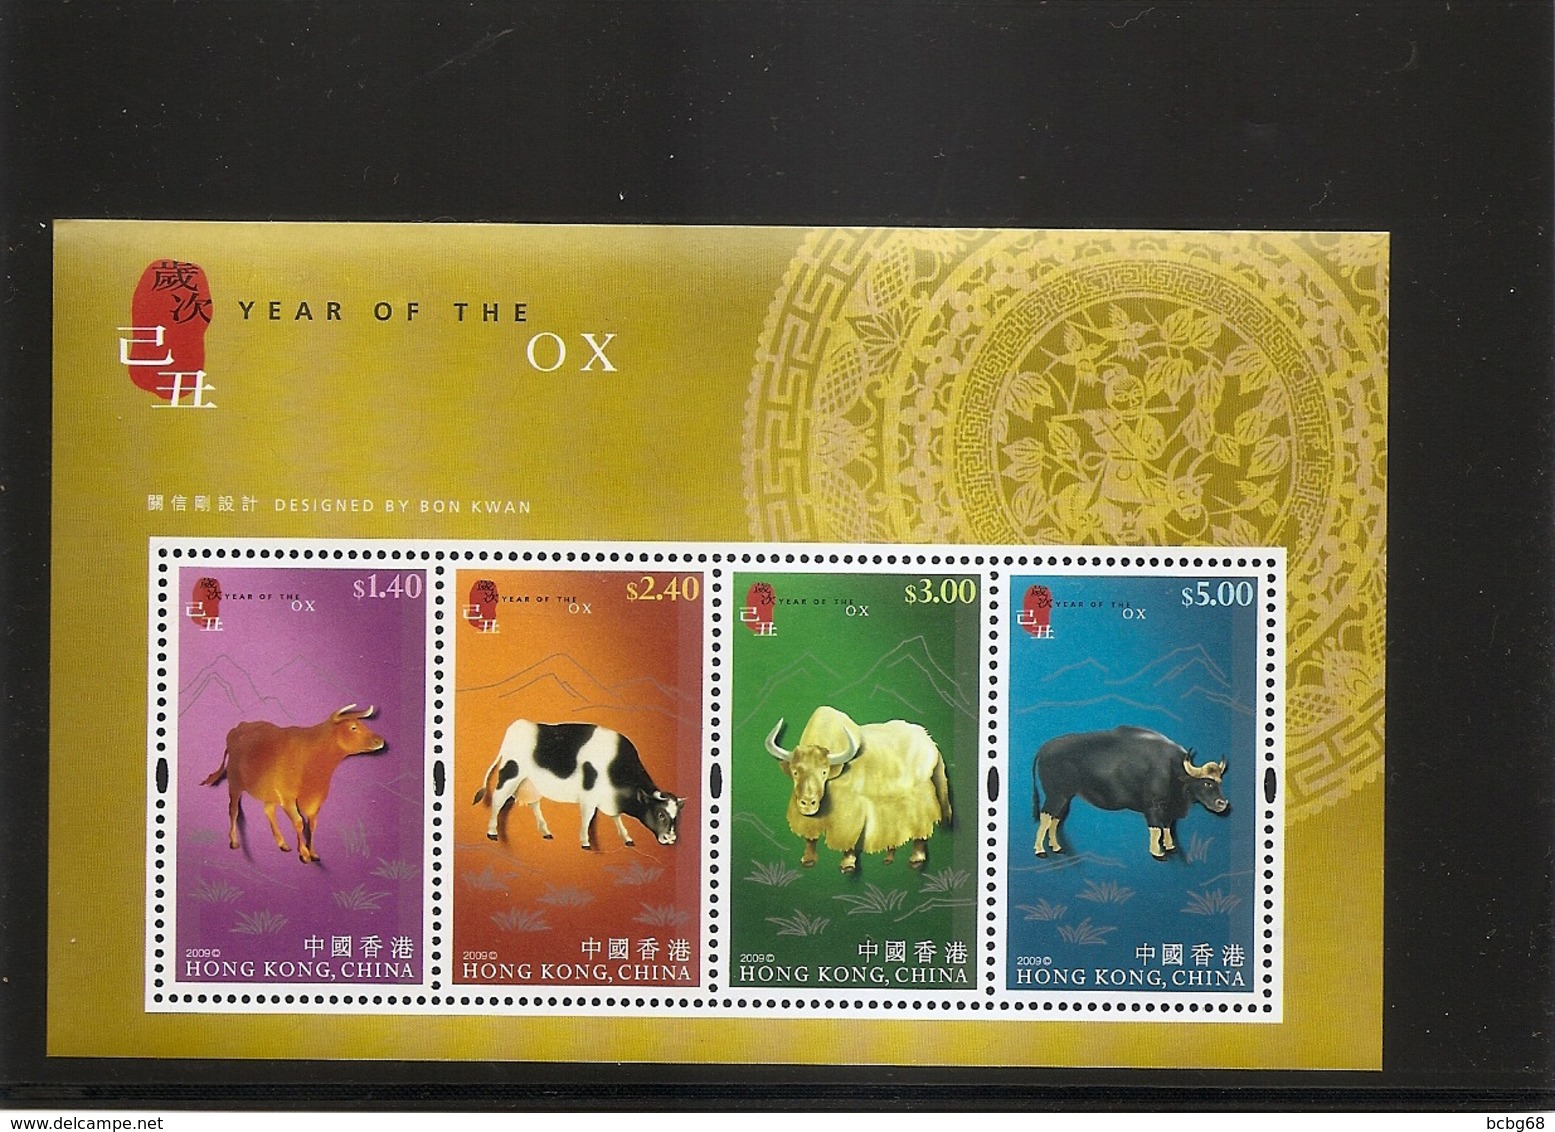 HONG KONG CHINA Souvenir Sheet YEAR OF OX MNH Scott 1346b 2009 - Blocks & Sheetlets